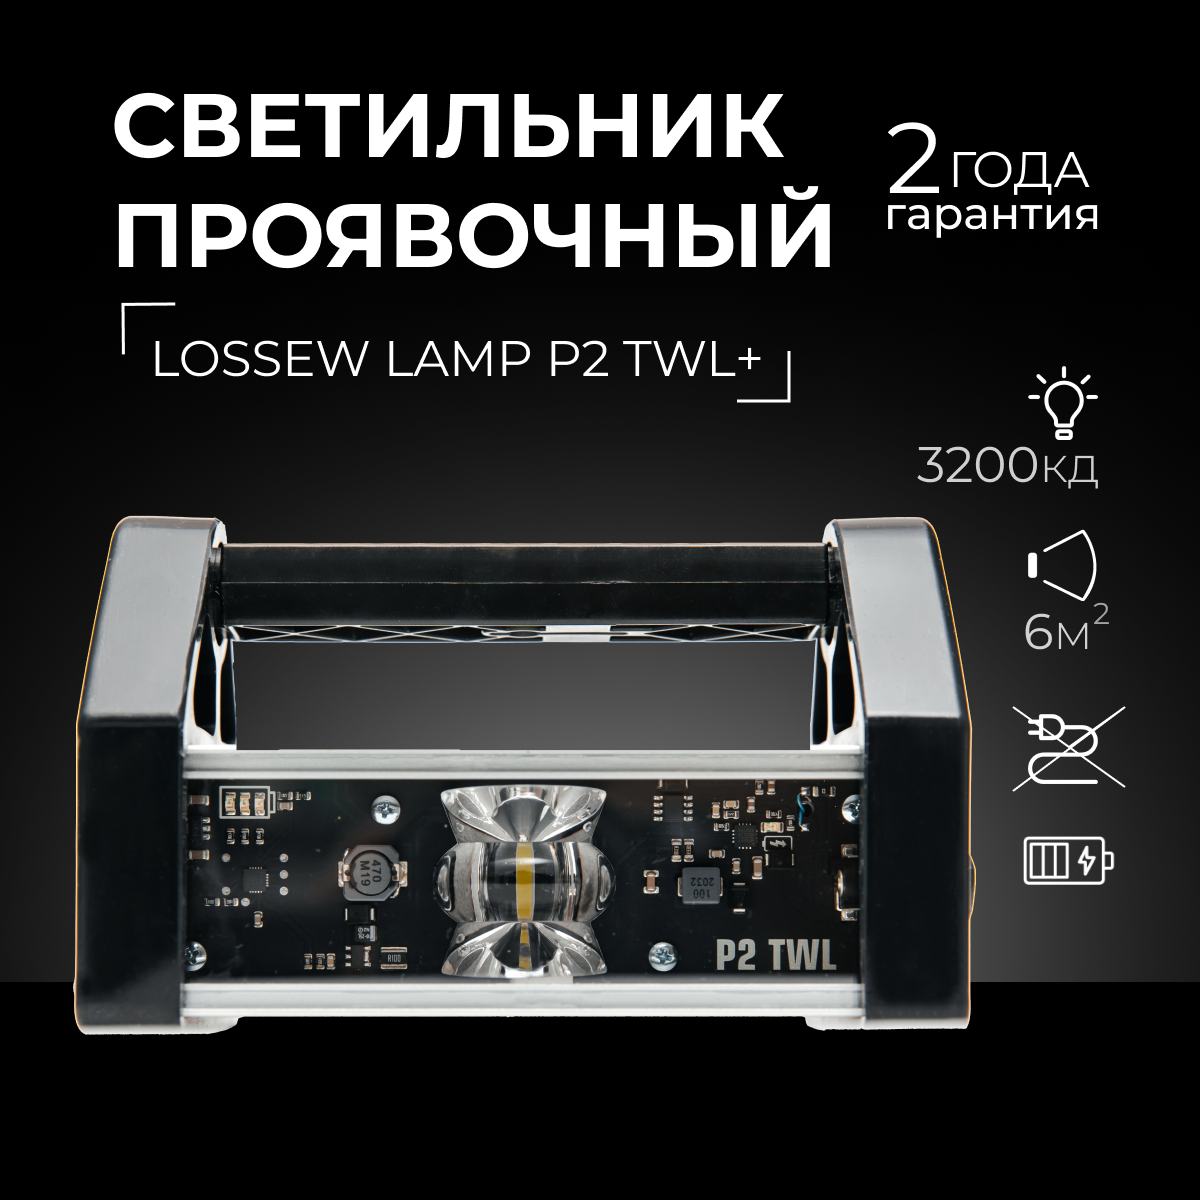 Проявочный светильник Lossew Lamp P2 TWL, лампа малярная